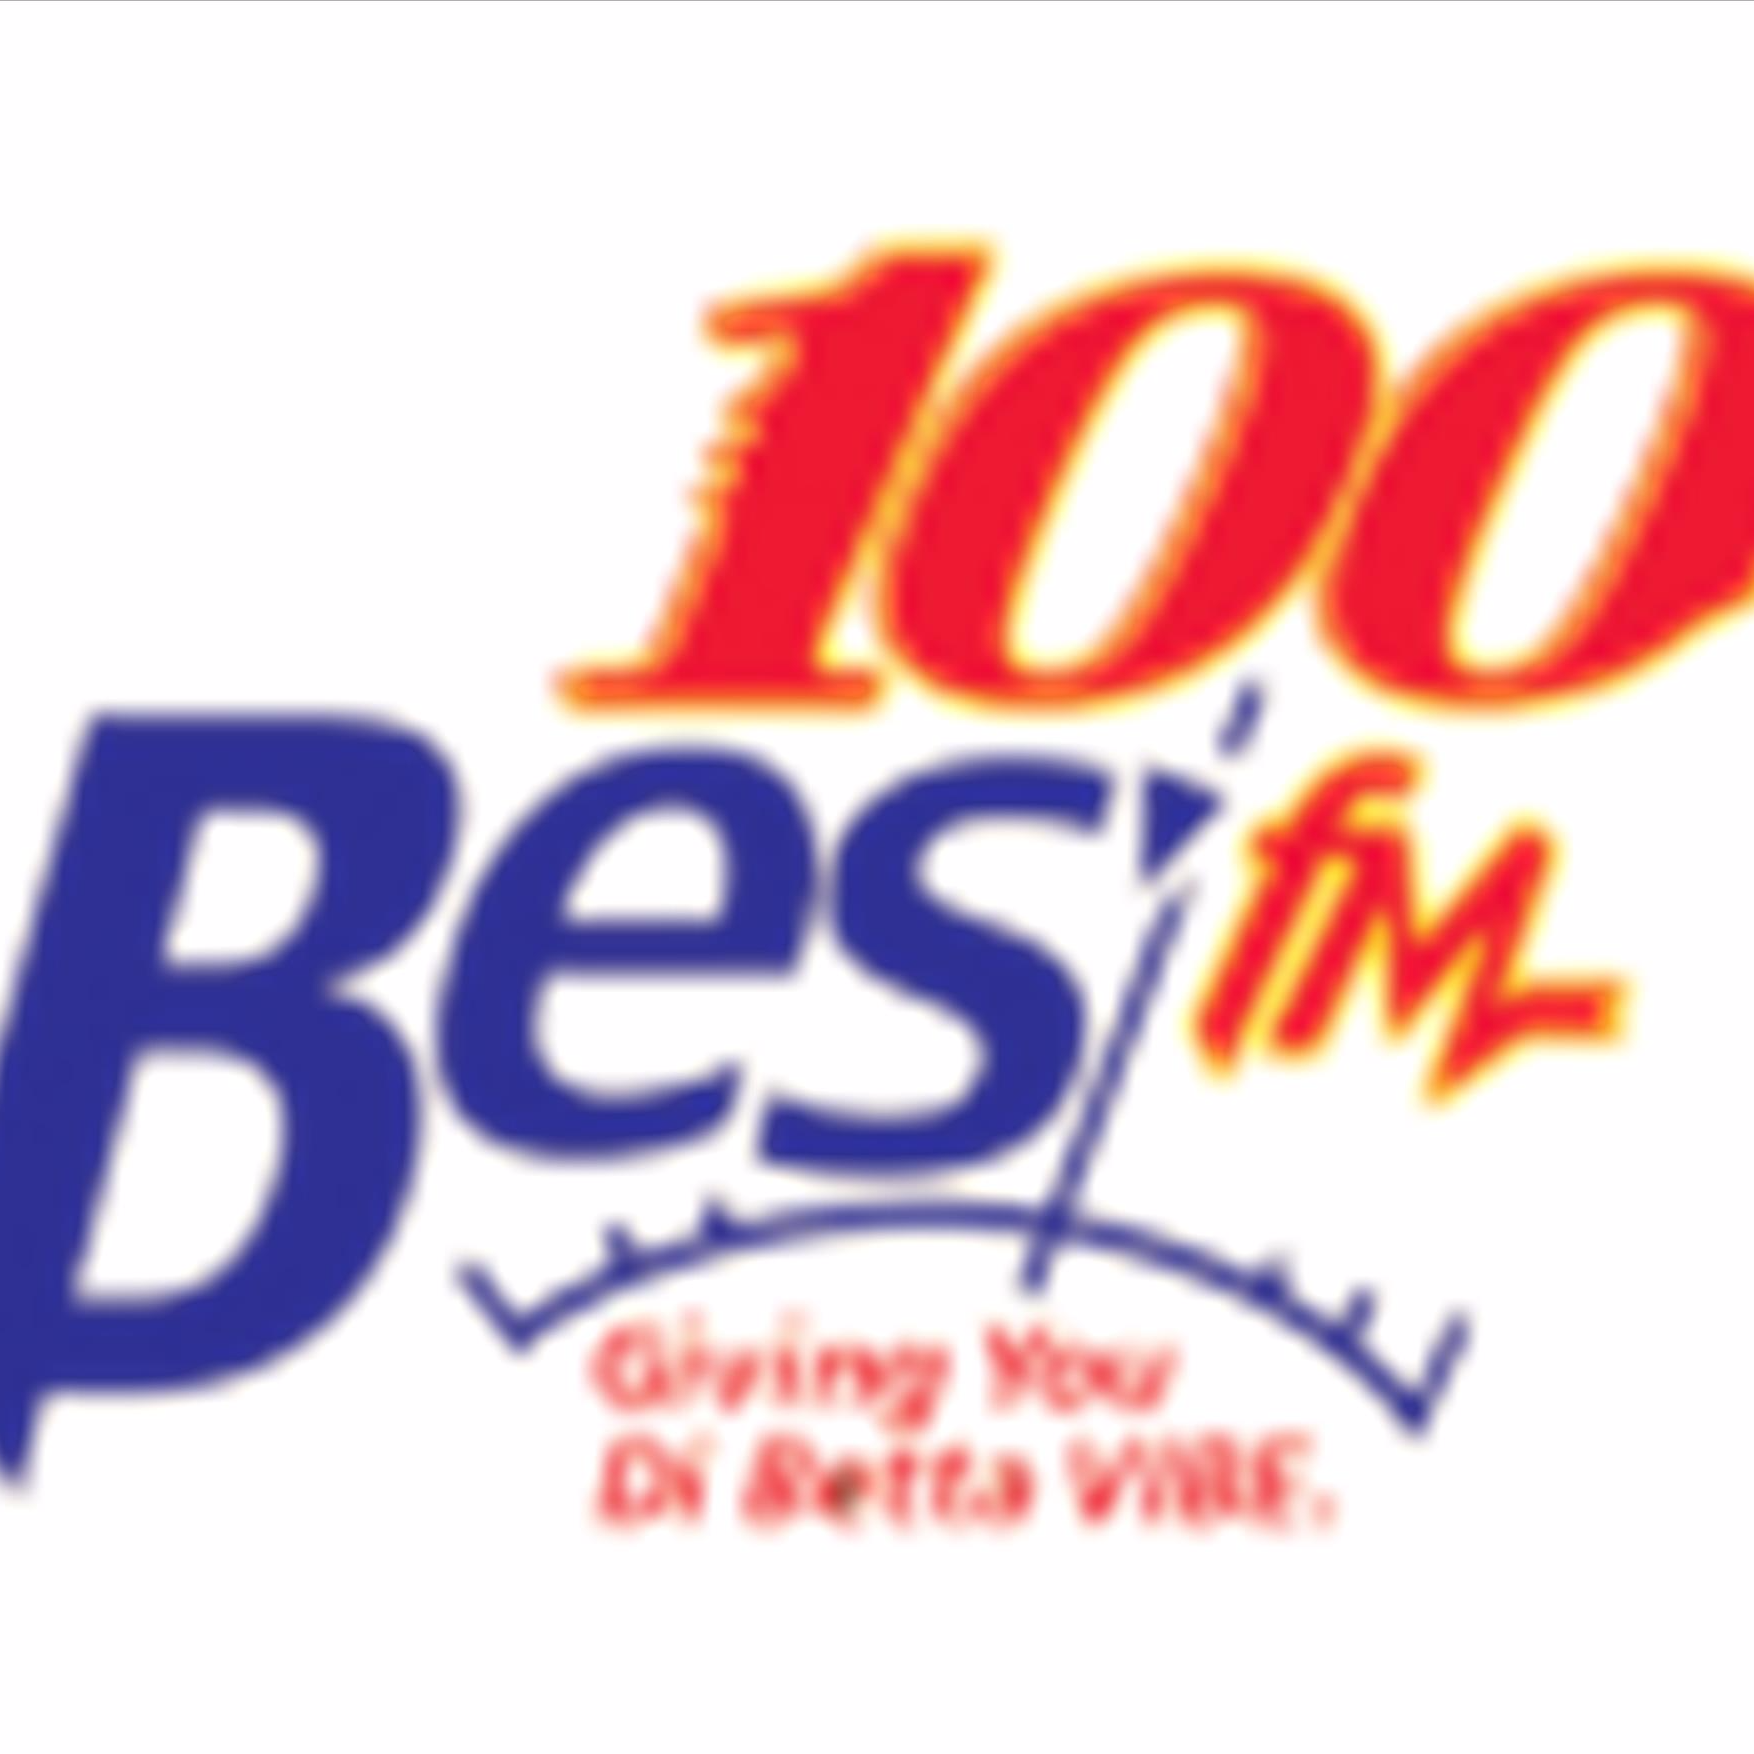 BESS100FM